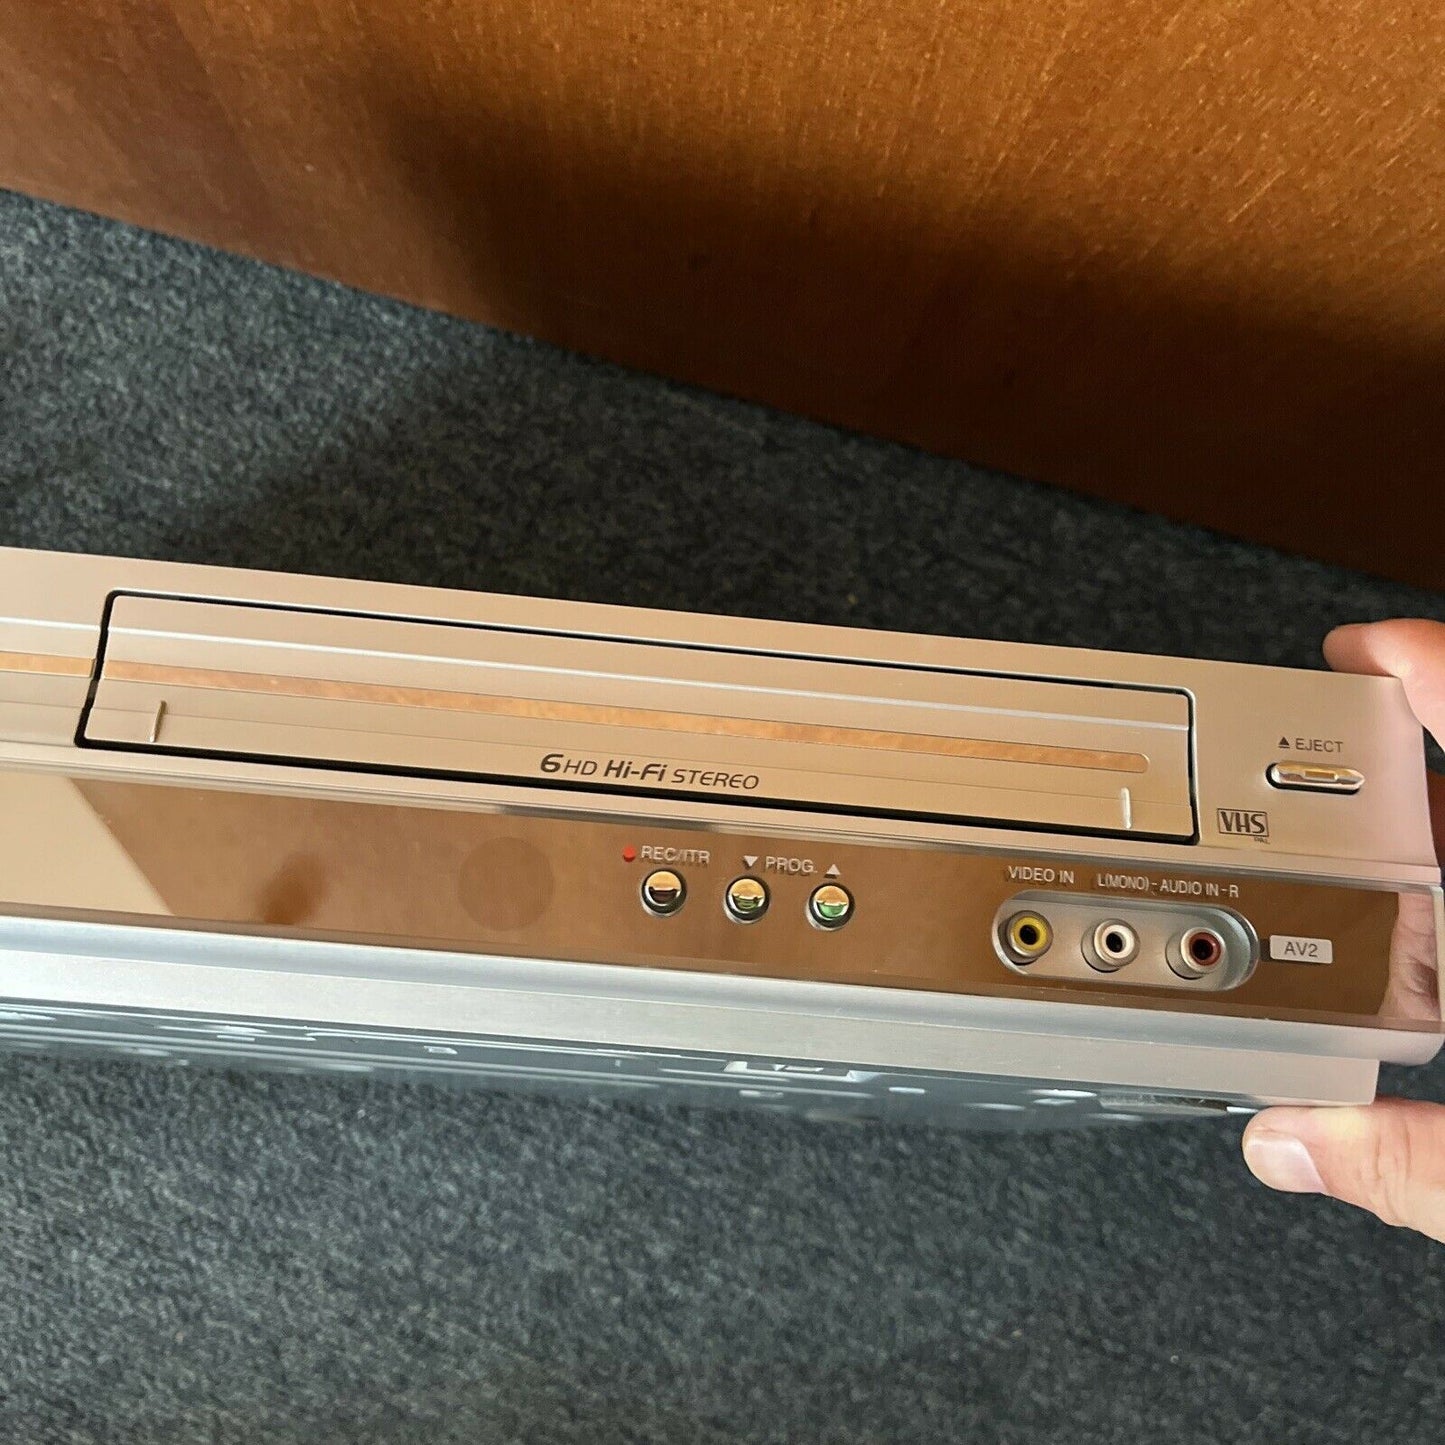 LG V8824W DVD Player / VHS Video Cassette Recorder Combo 6HD Hi-Fi - No Remote